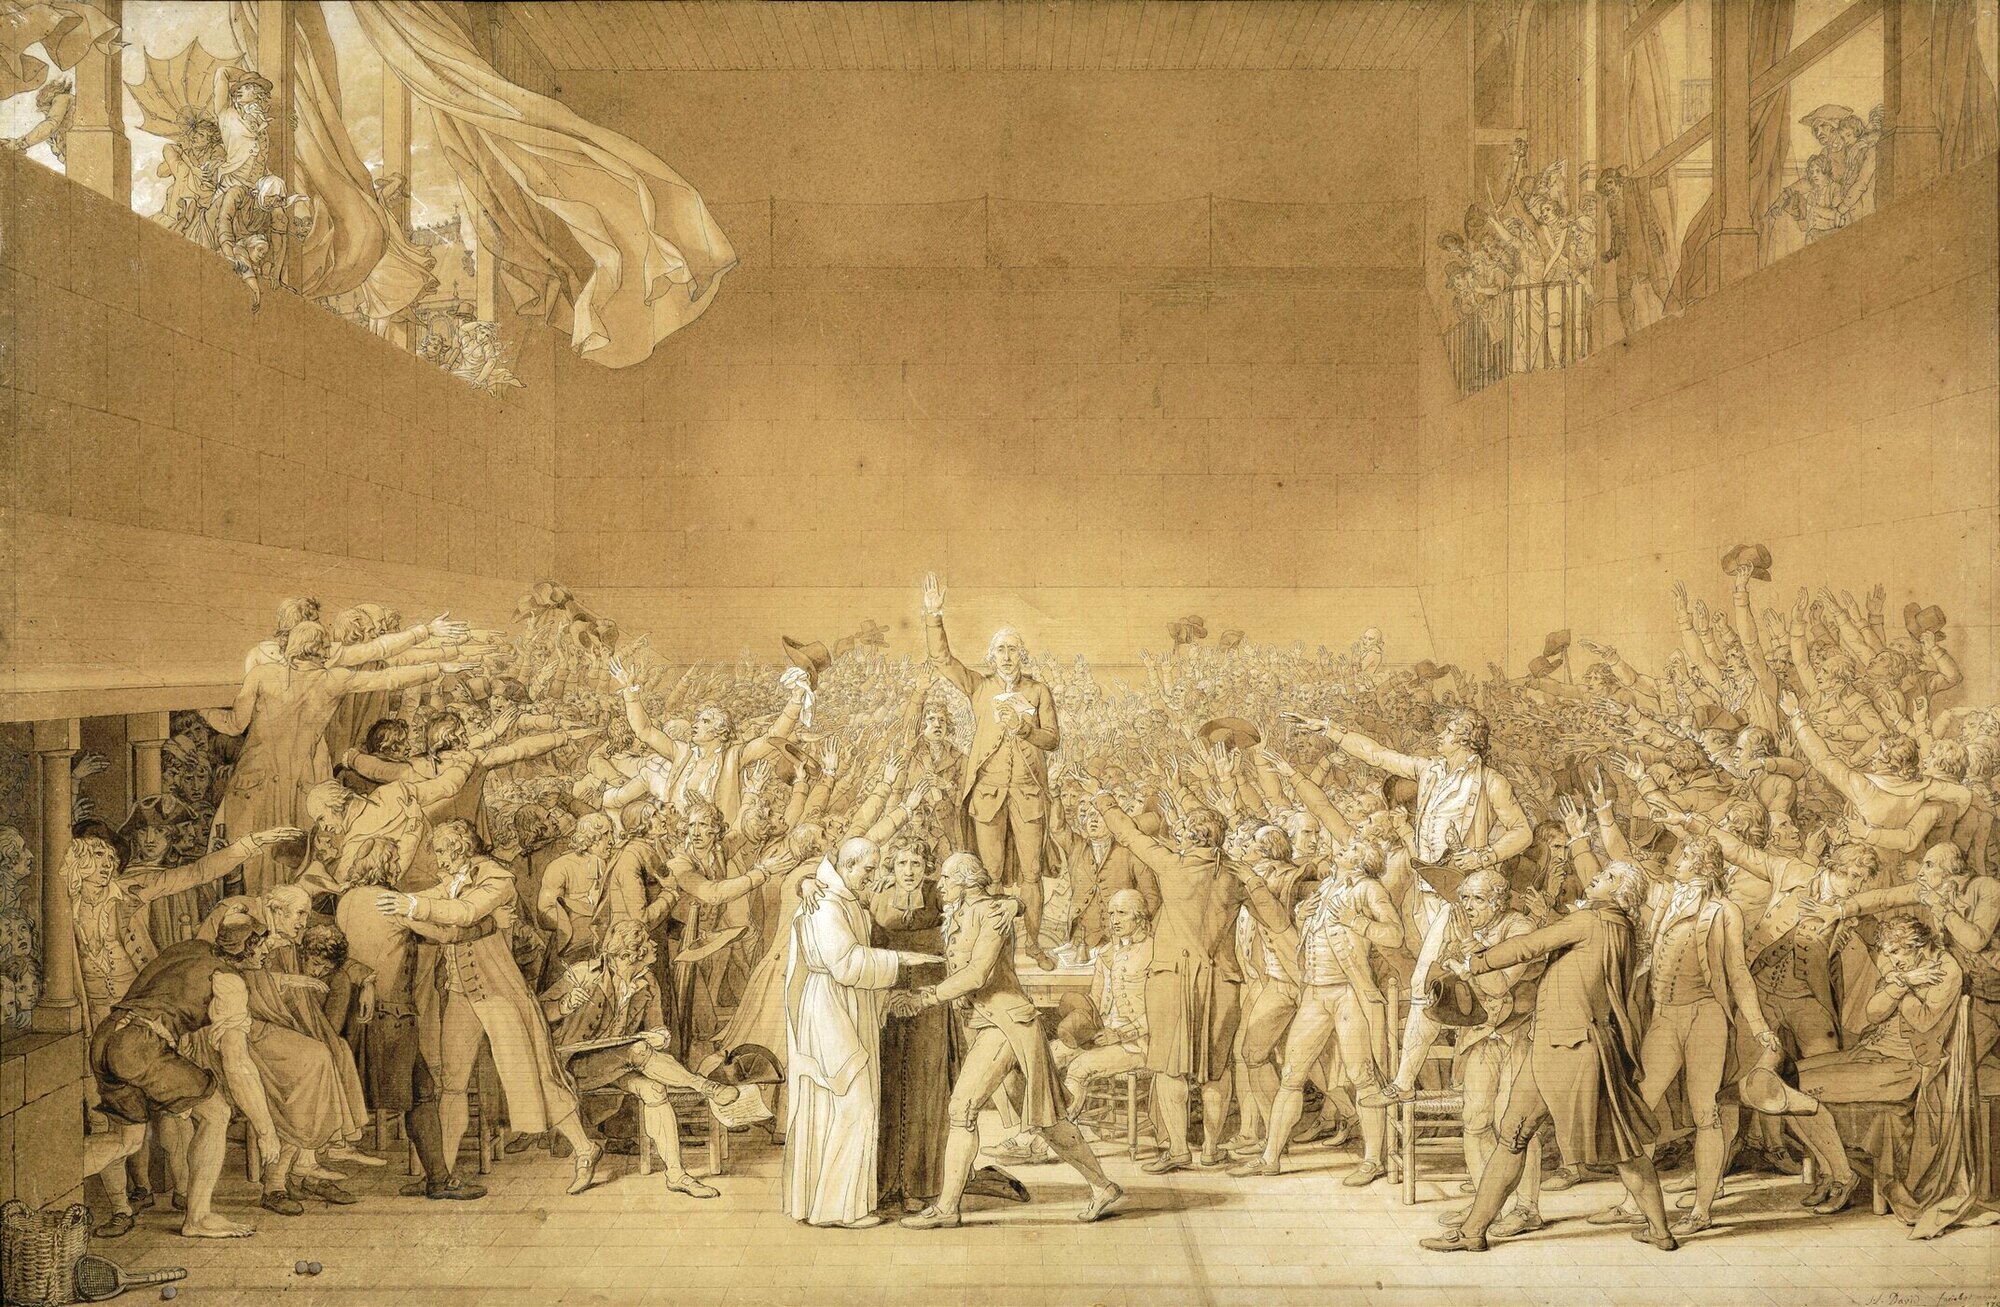 7. Juramento del Juego de la Pelota, David, 1791.